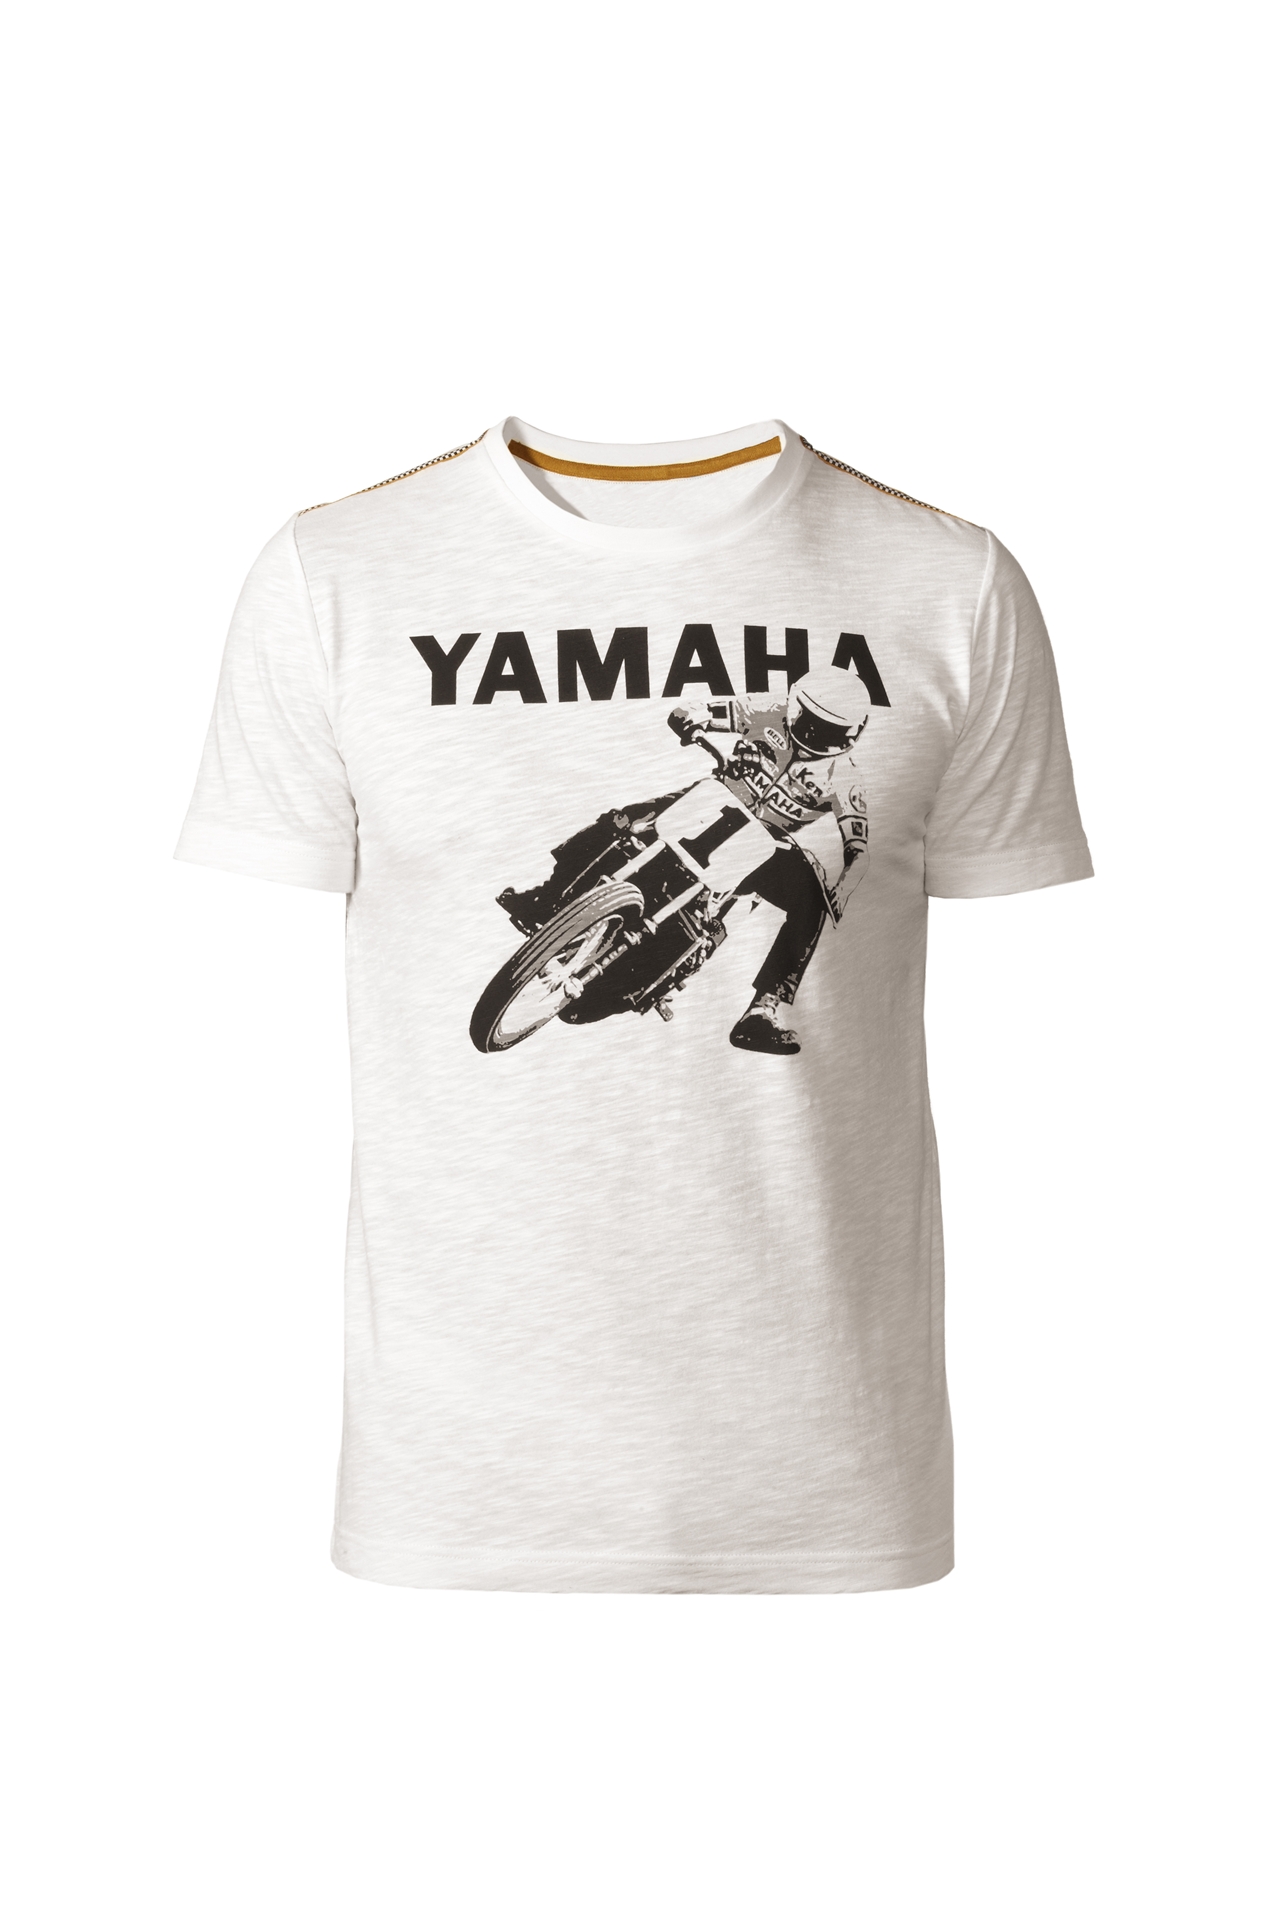 Yamaha Heritage 2013